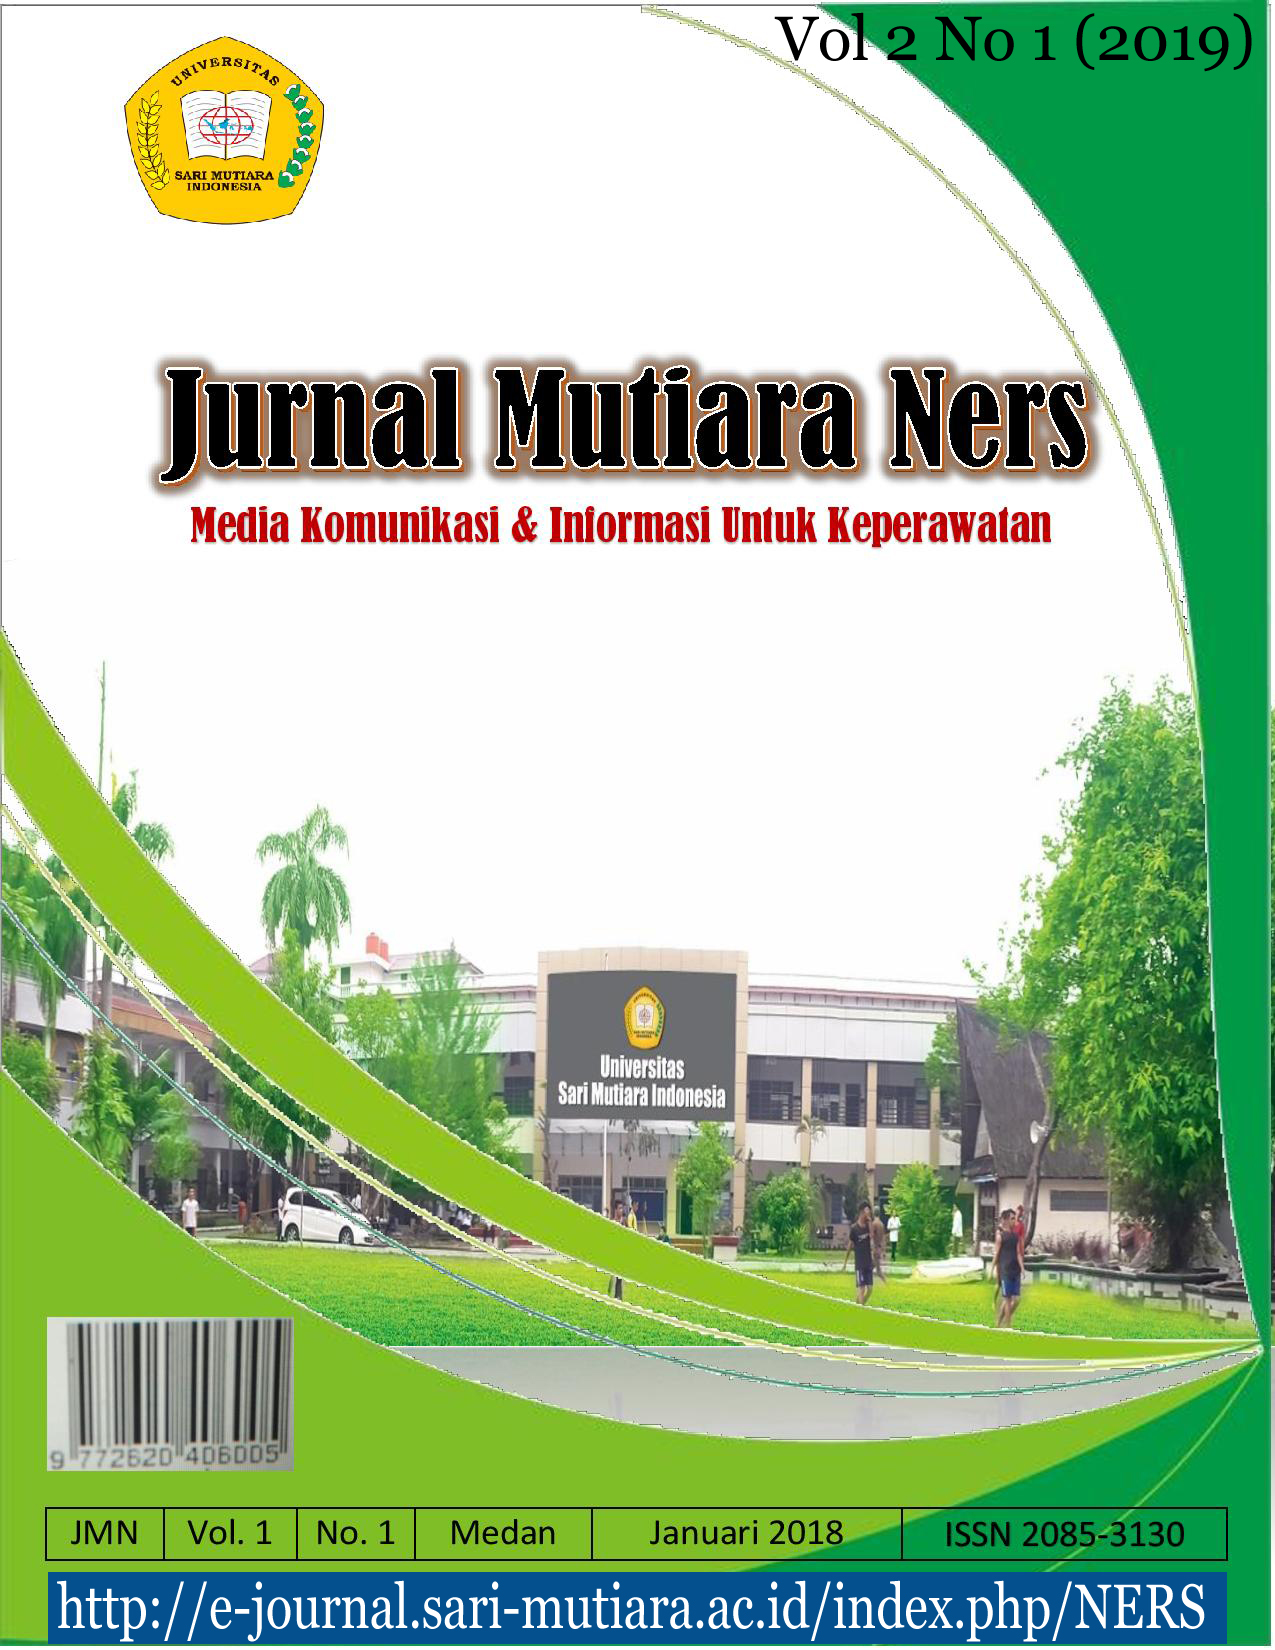 					View Vol. 2 No. 1 (2019): JURNAL MUTIARA NERS
				